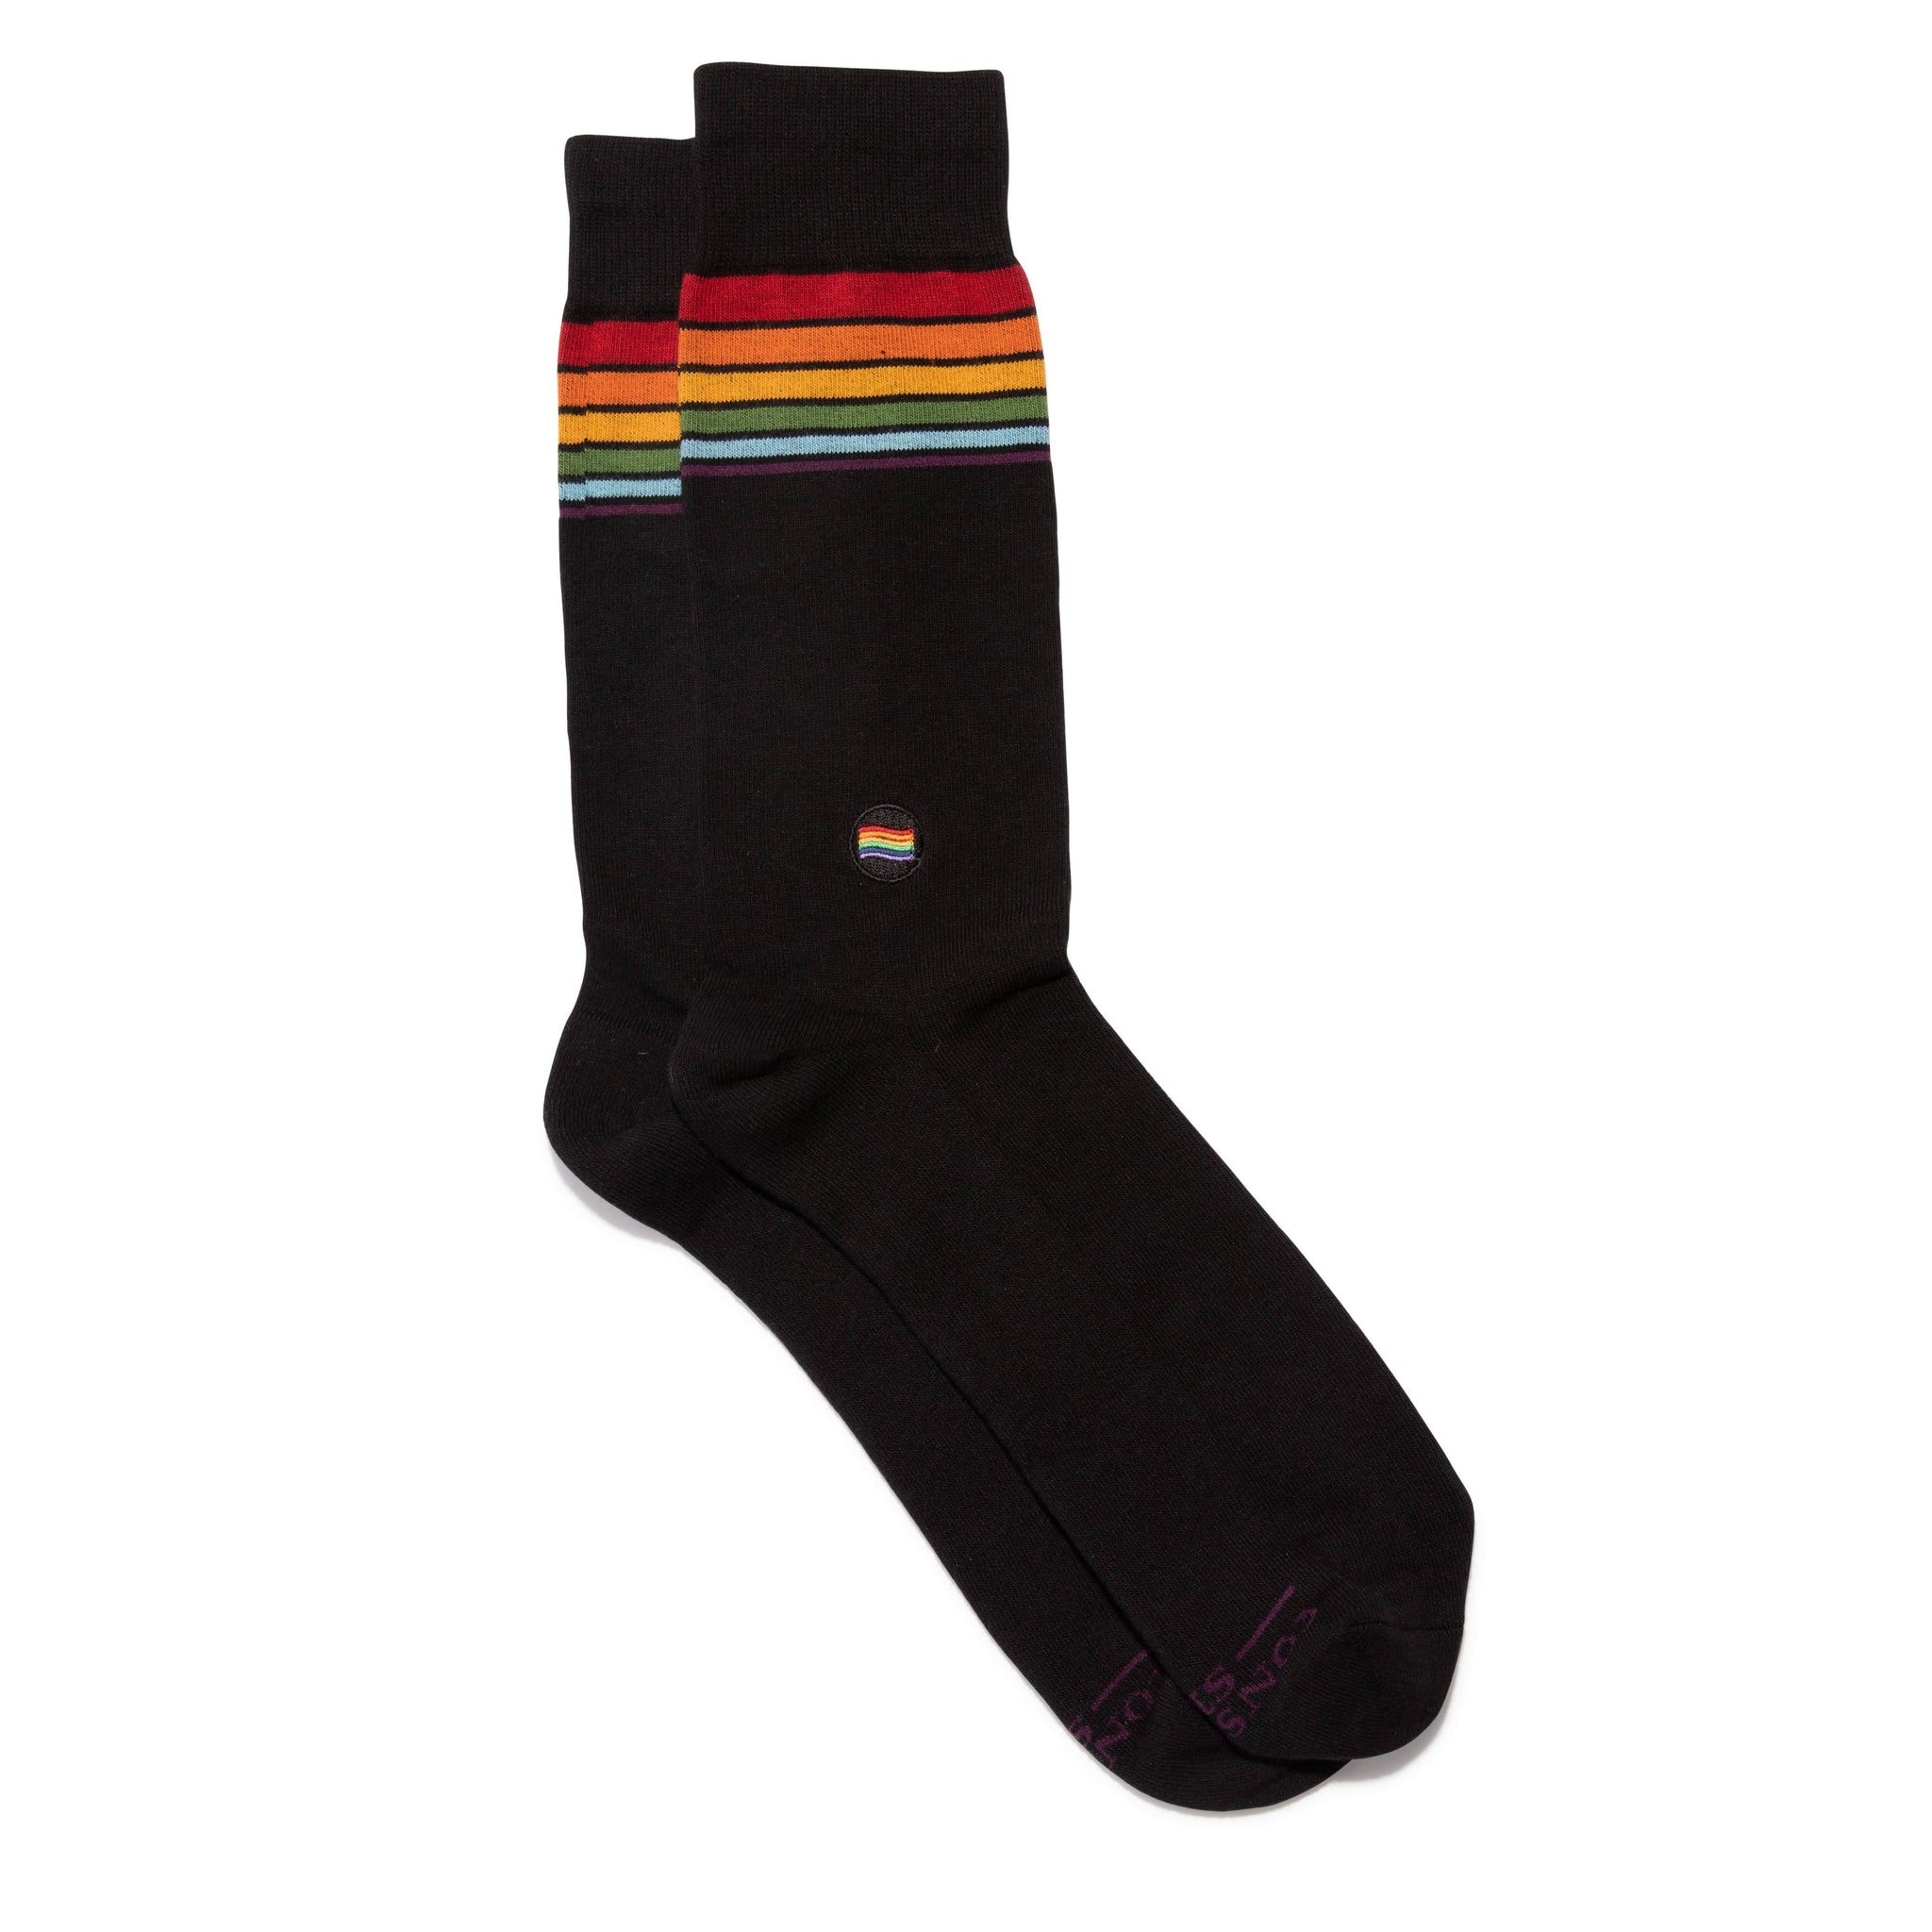 Socks that Support LGBTQ Youth